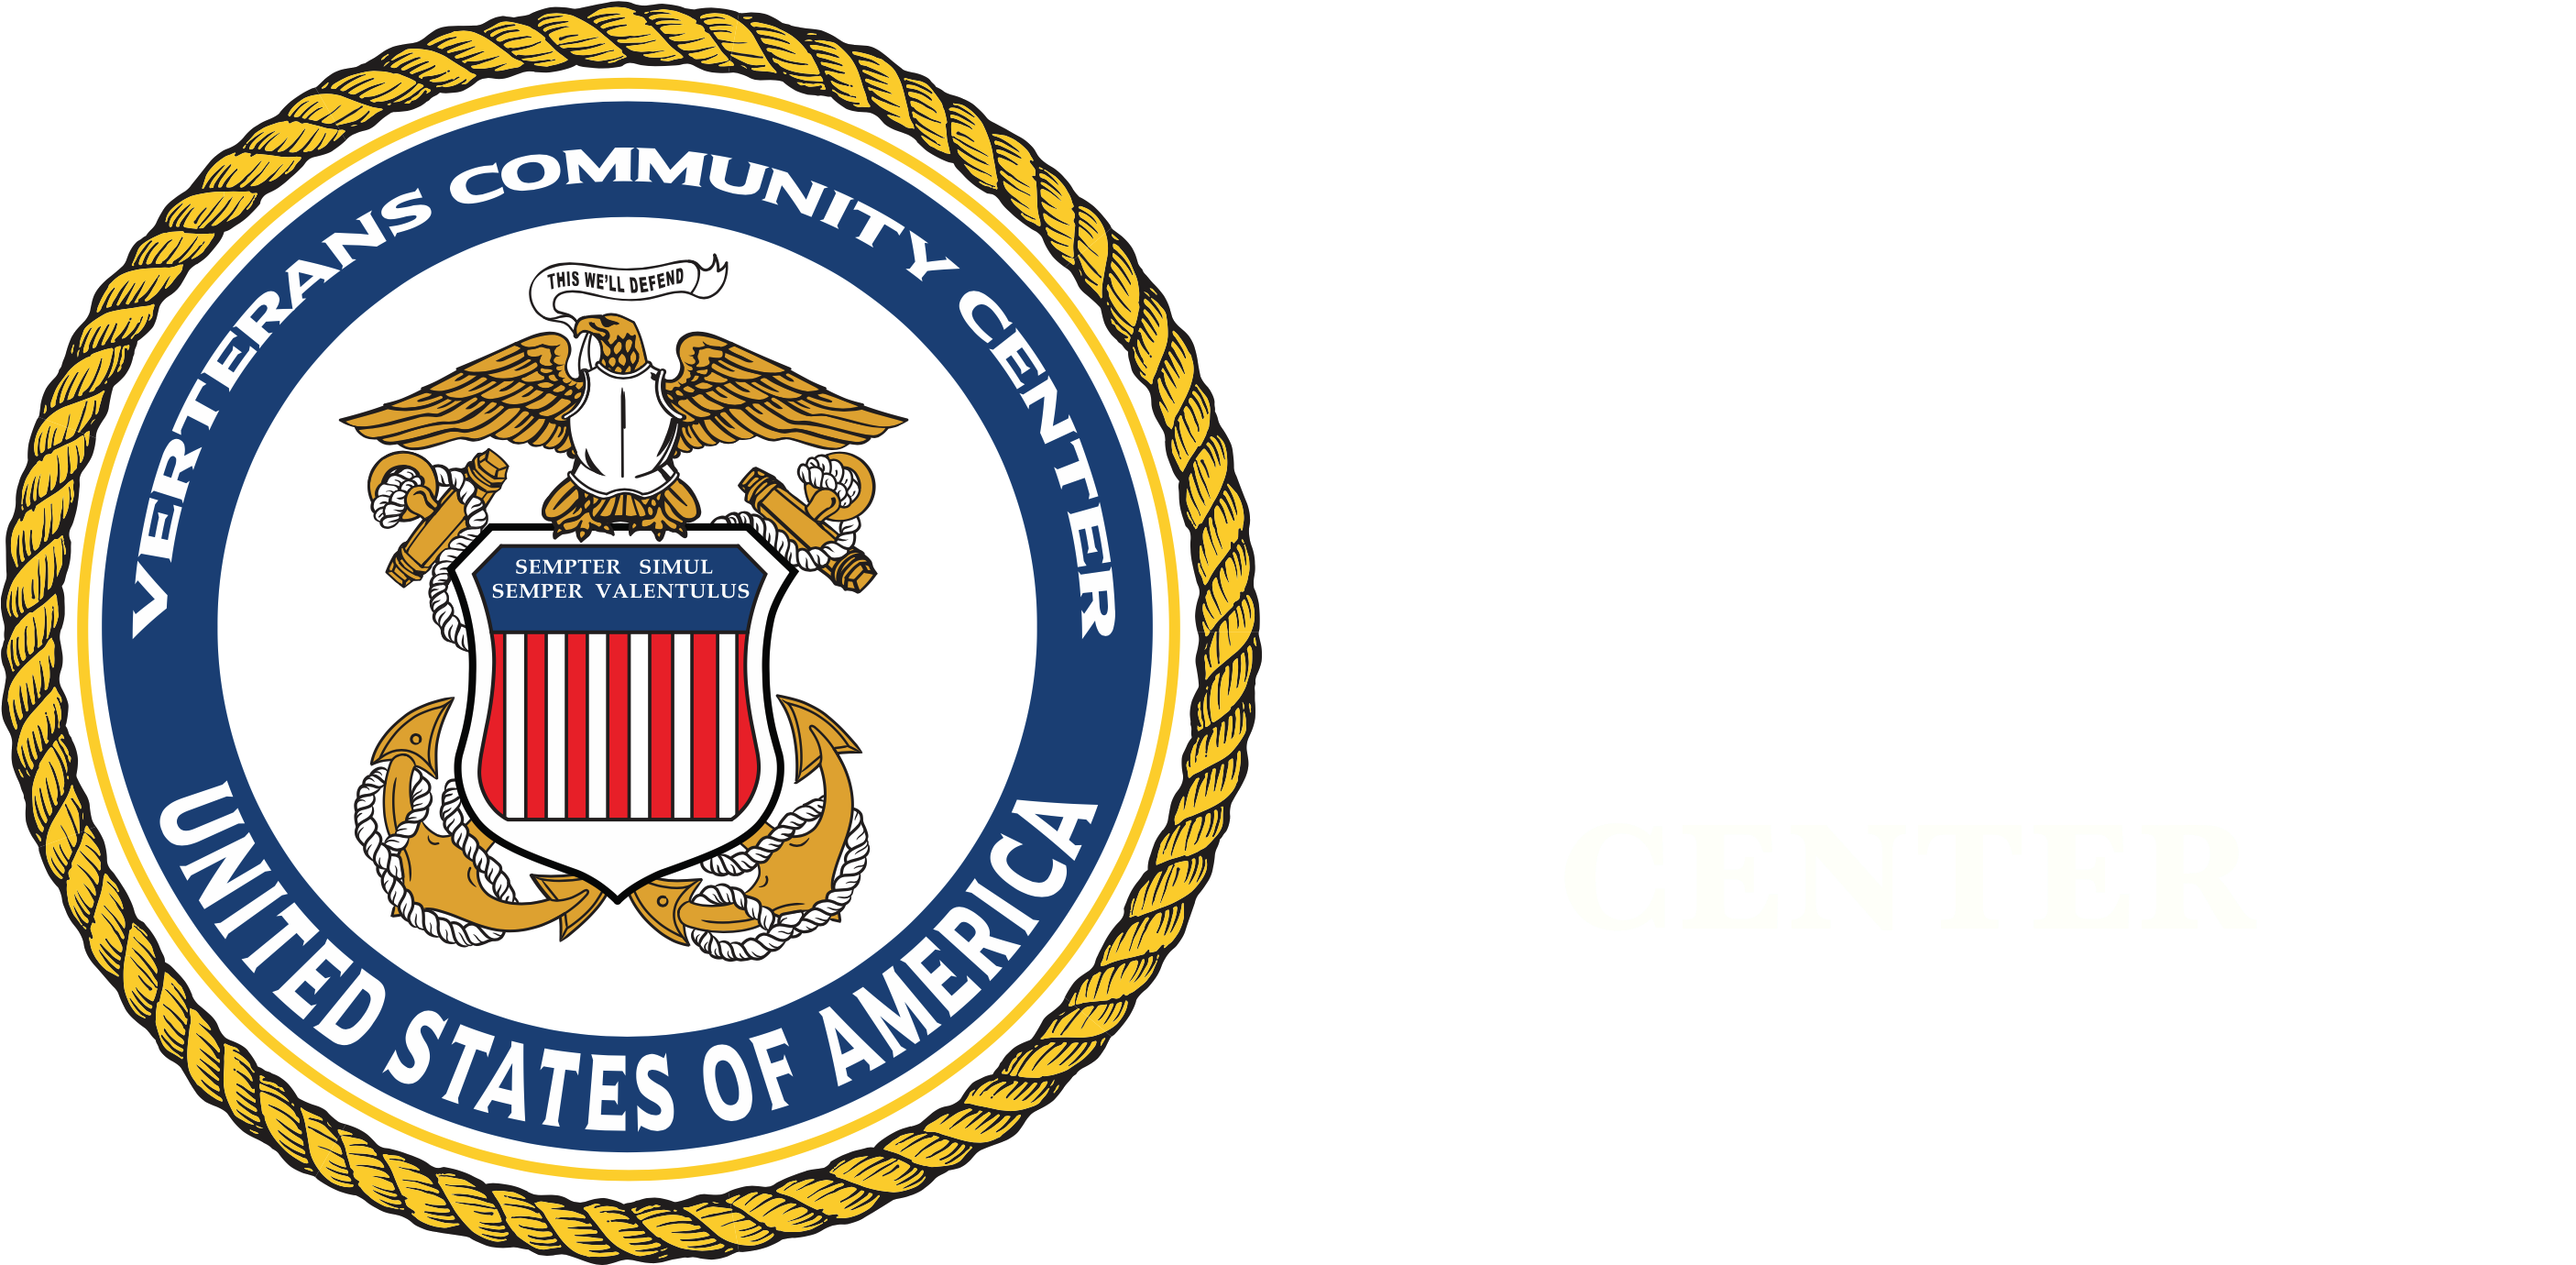 Veterans Community Center - Community Centre (2893x1404)